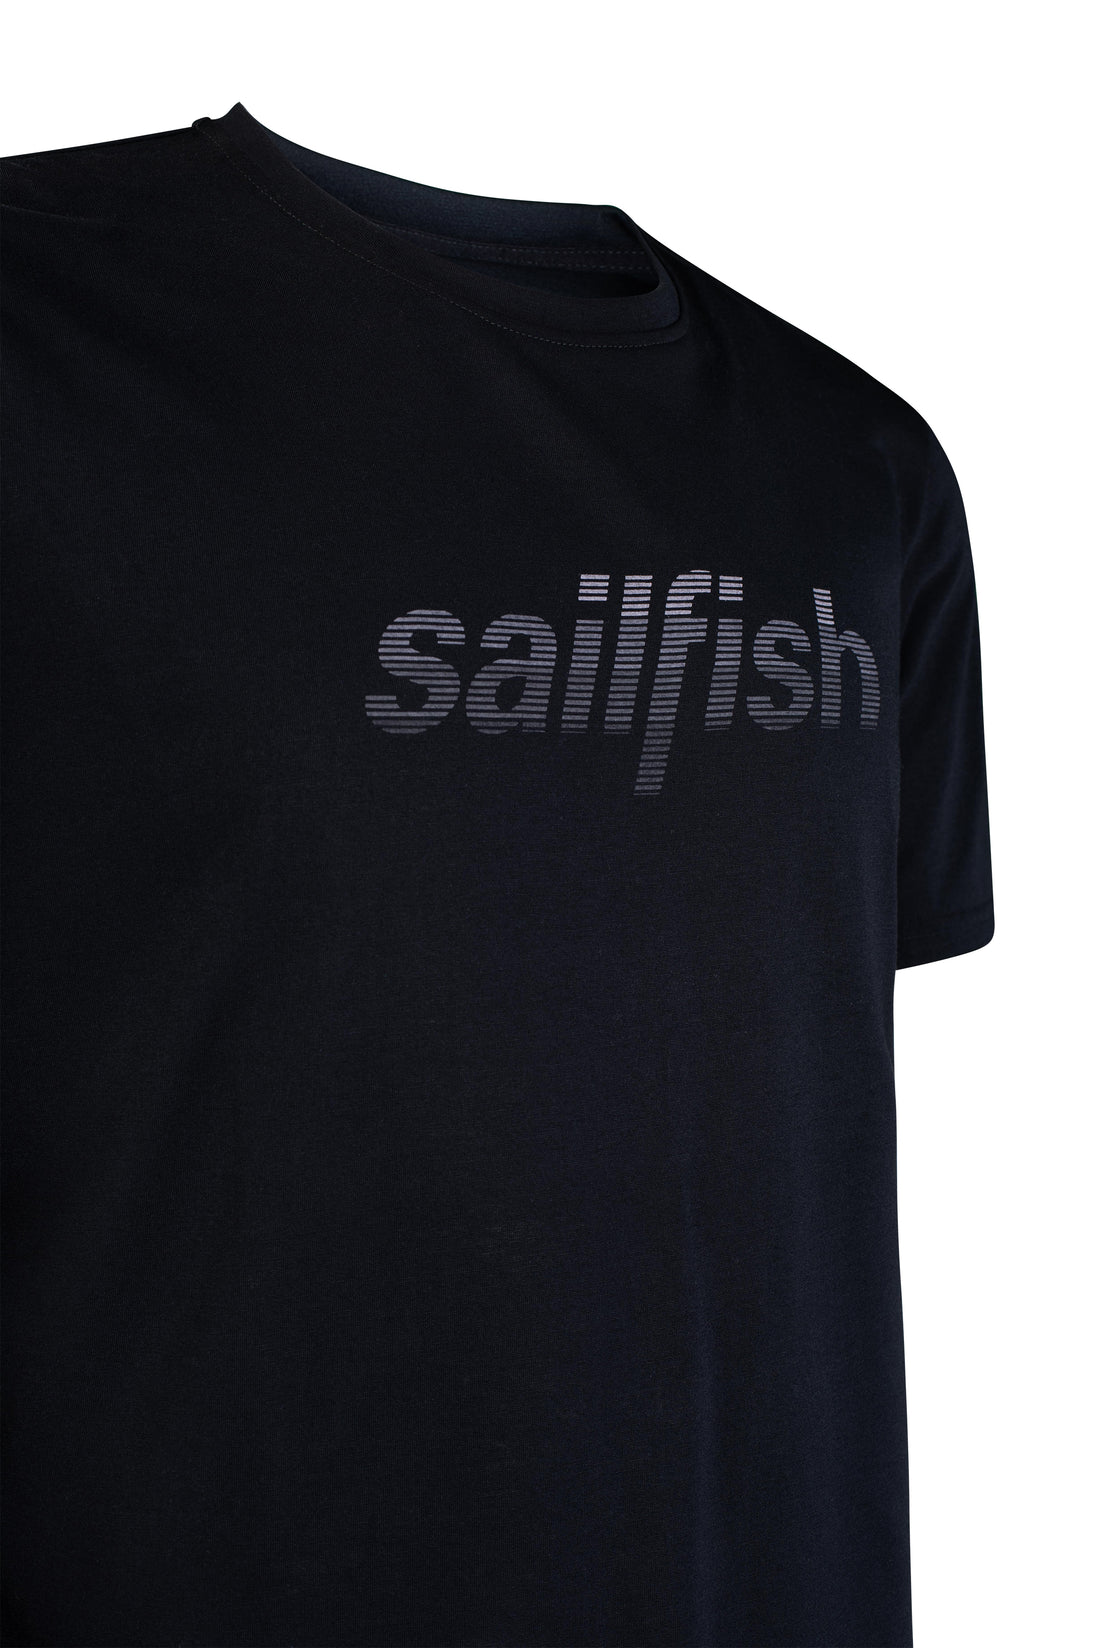 Men's Sailfish Swordfish Sport Fishing Saltwater Fish Fisherman Reel Boat  Lure Catch Ocean Gift Vacation Crewneck T-shirt -  Denmark